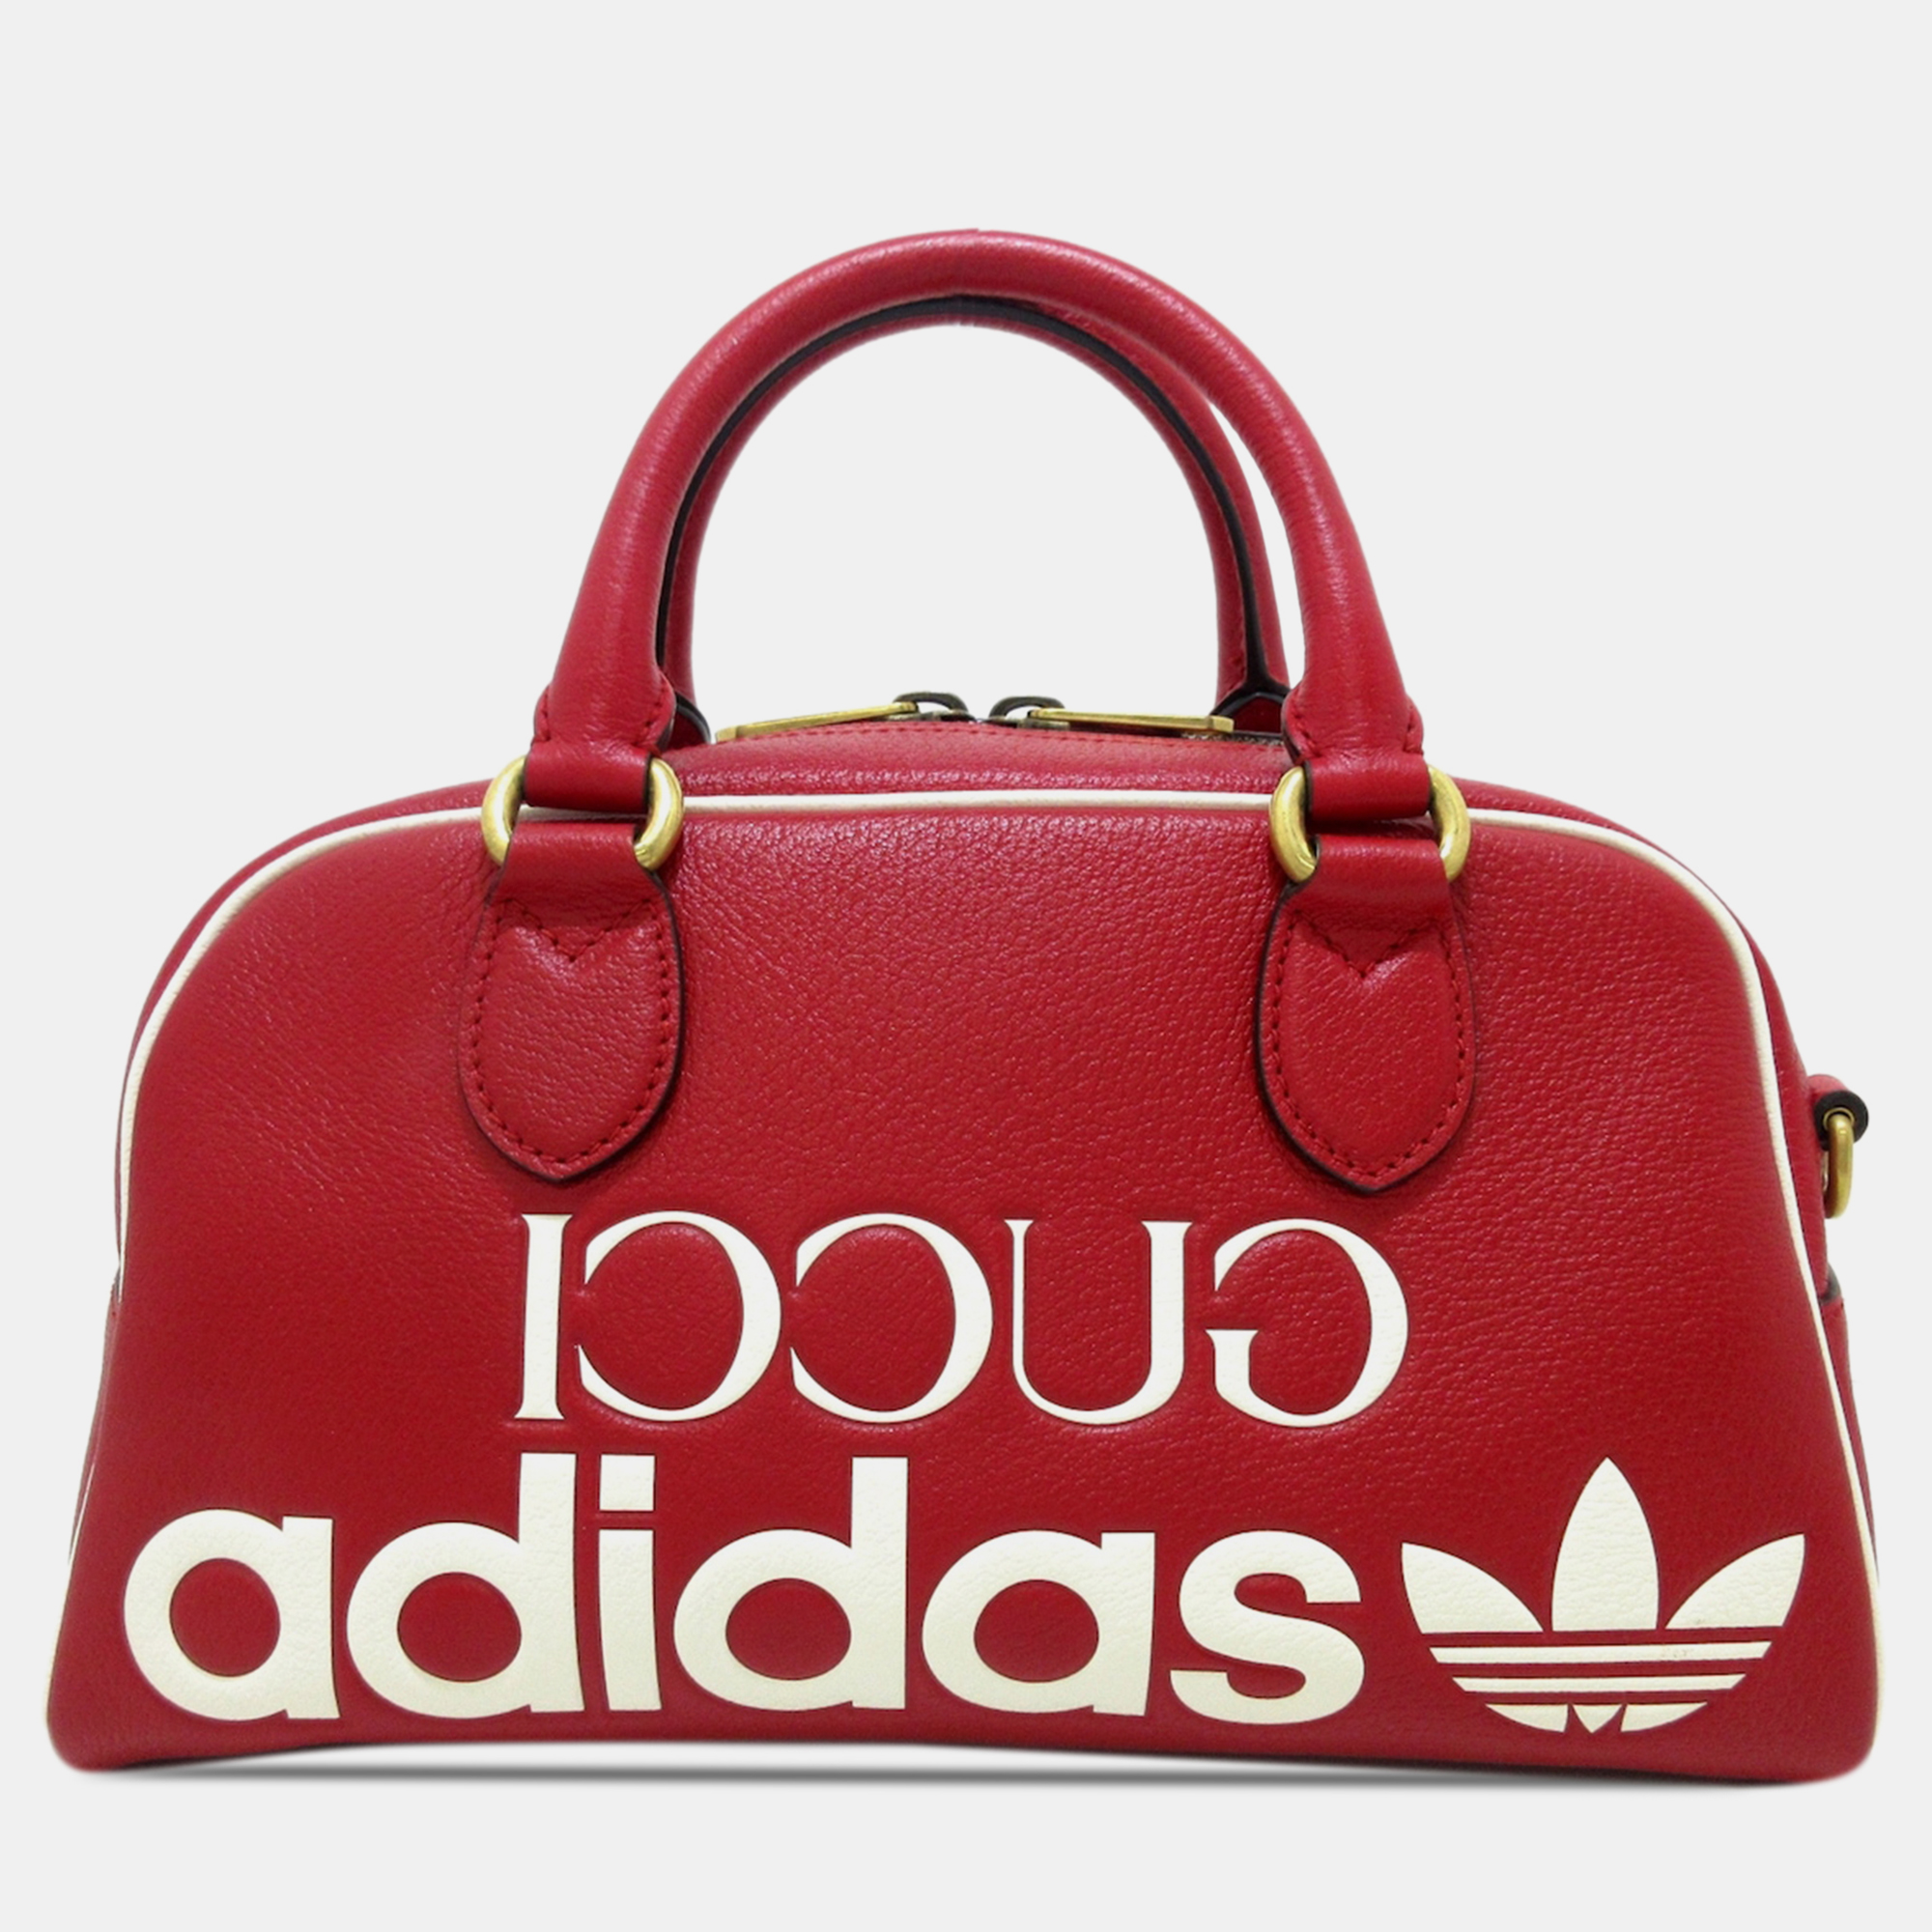 Gucci x adidas leather mini duffle bag